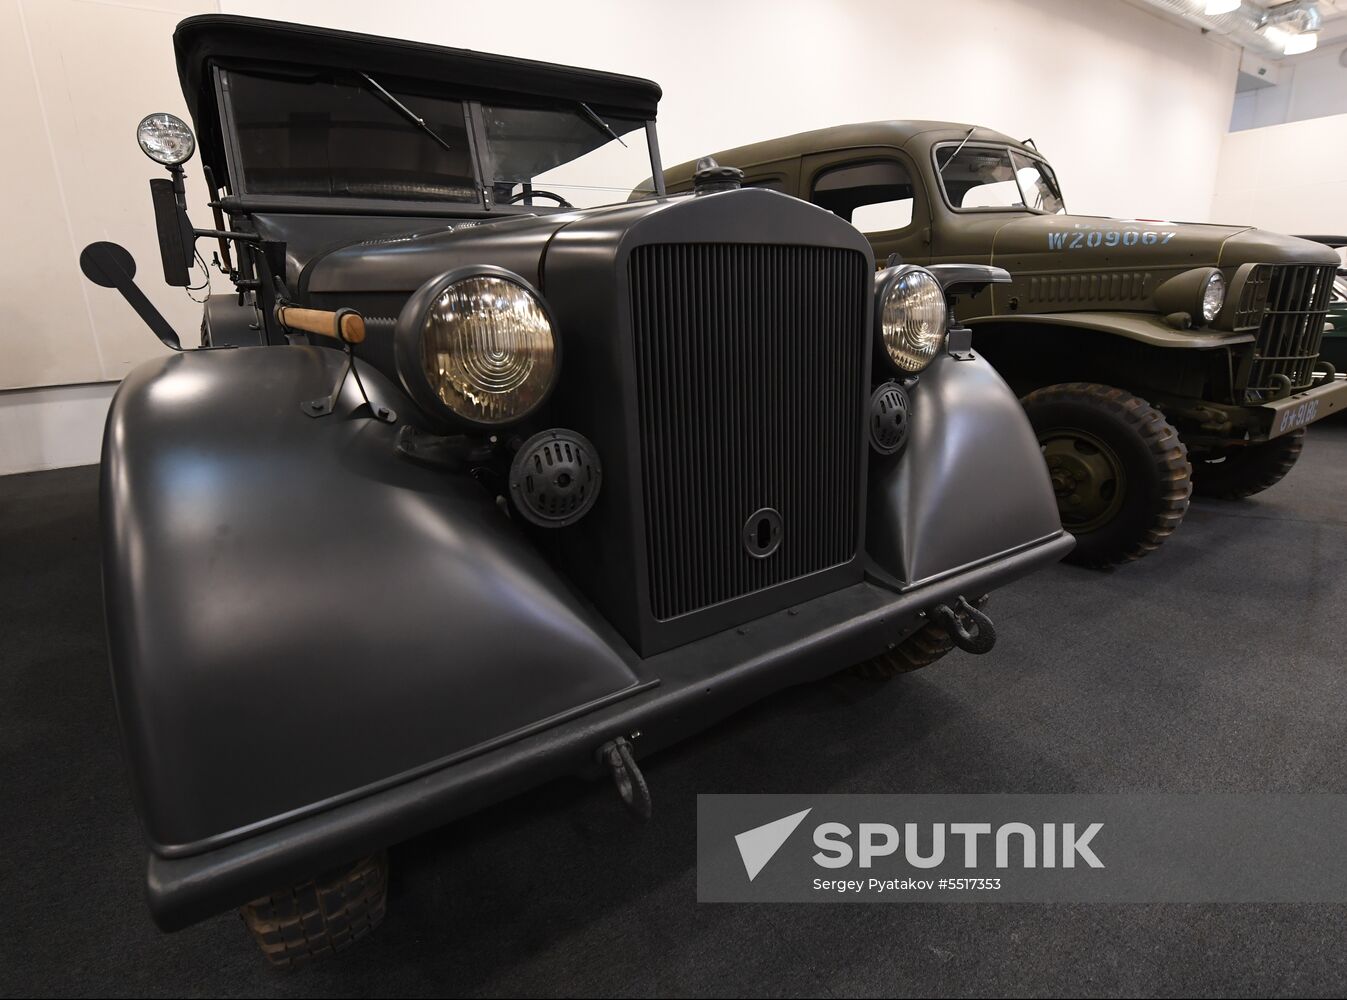 Retro cars auction exhibition